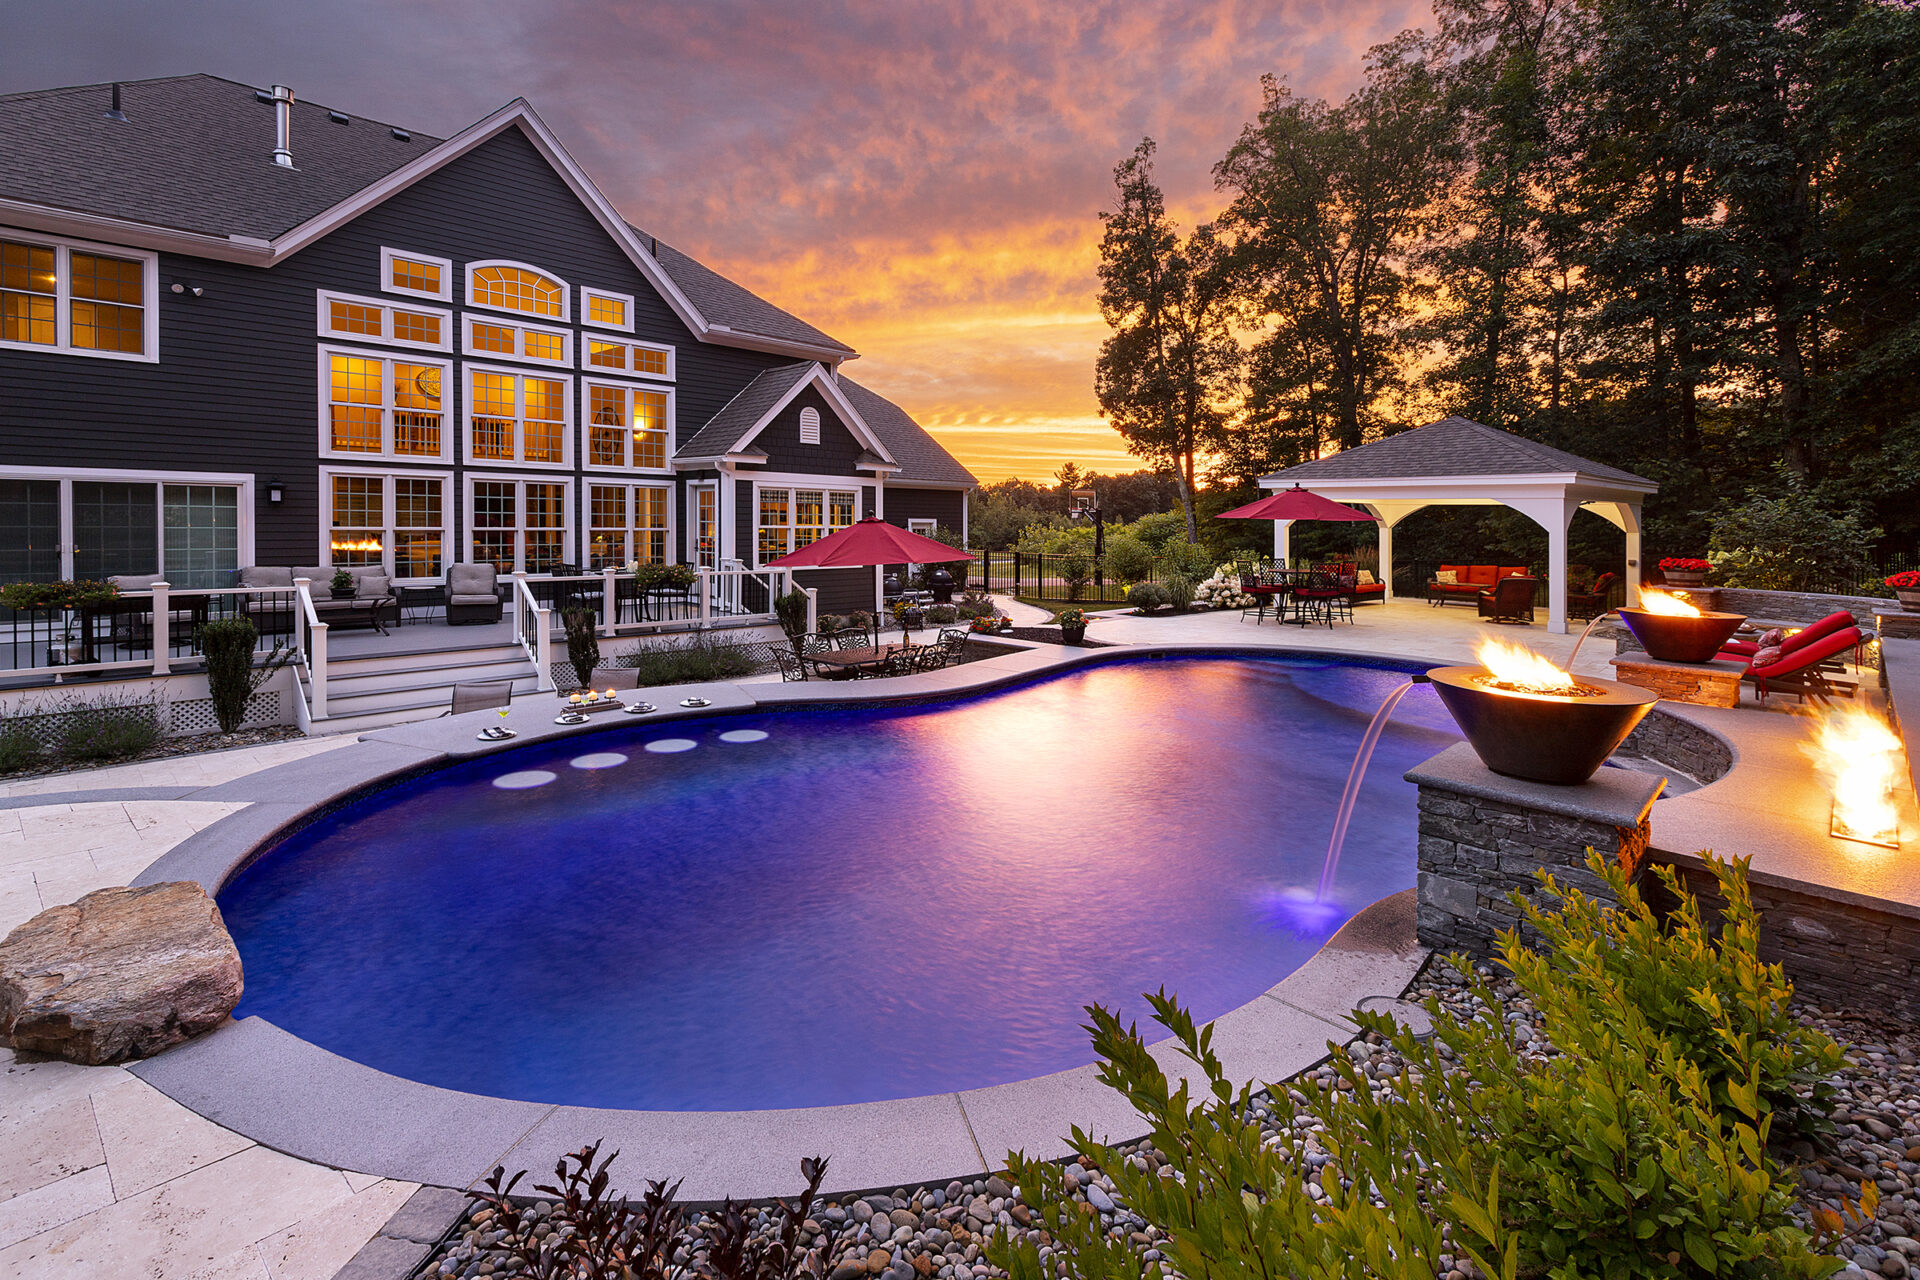 House, pool, sunset